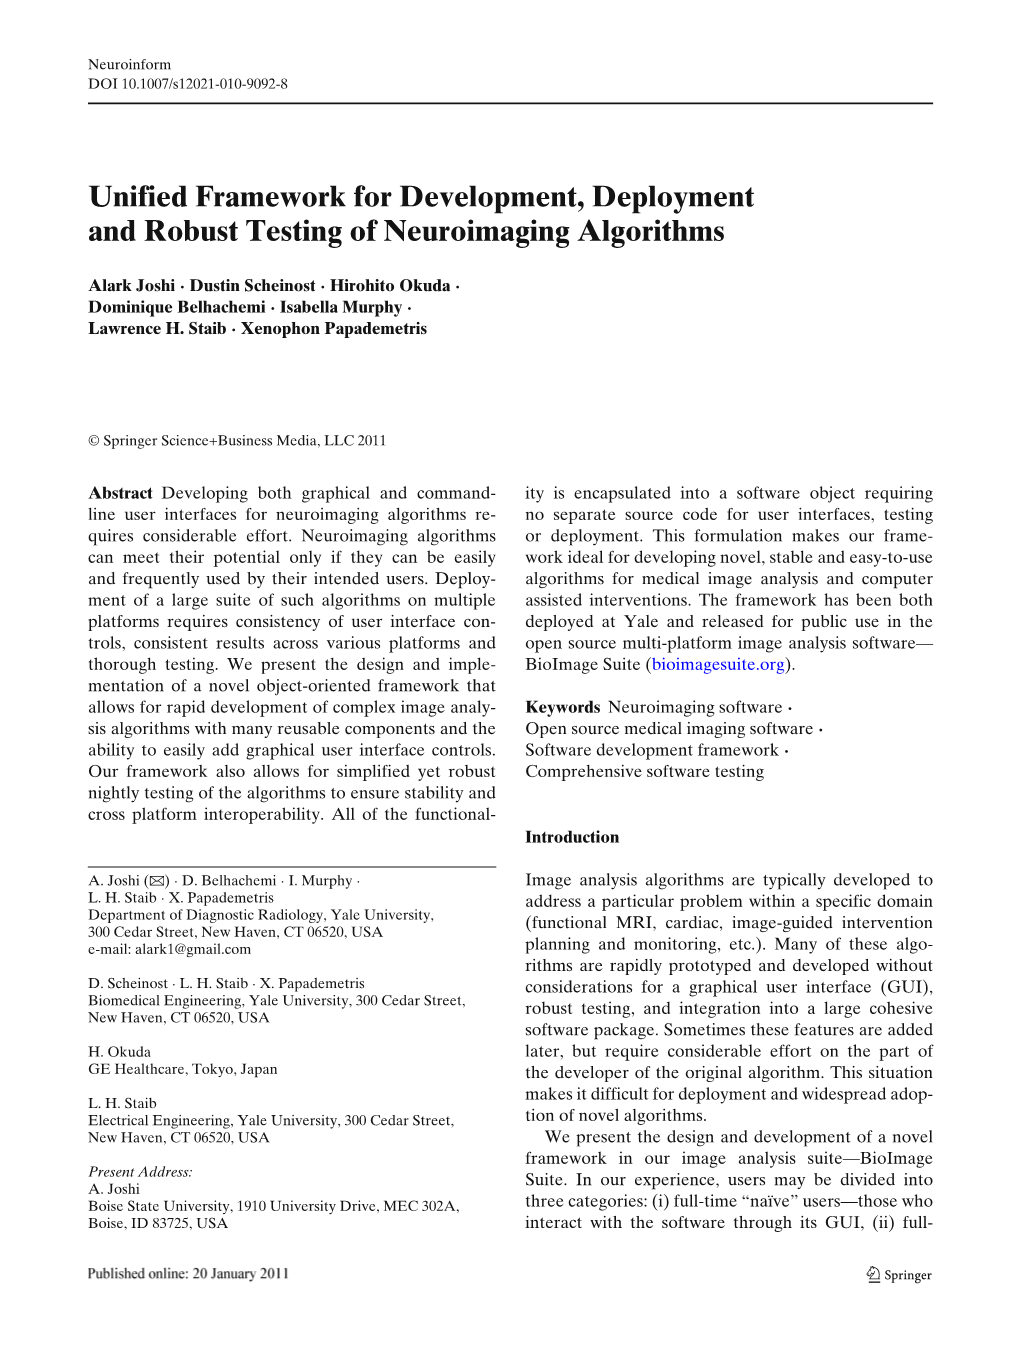 Unified Framework for Development, Deployment and Robust Testing of Neuroimaging Algorithms